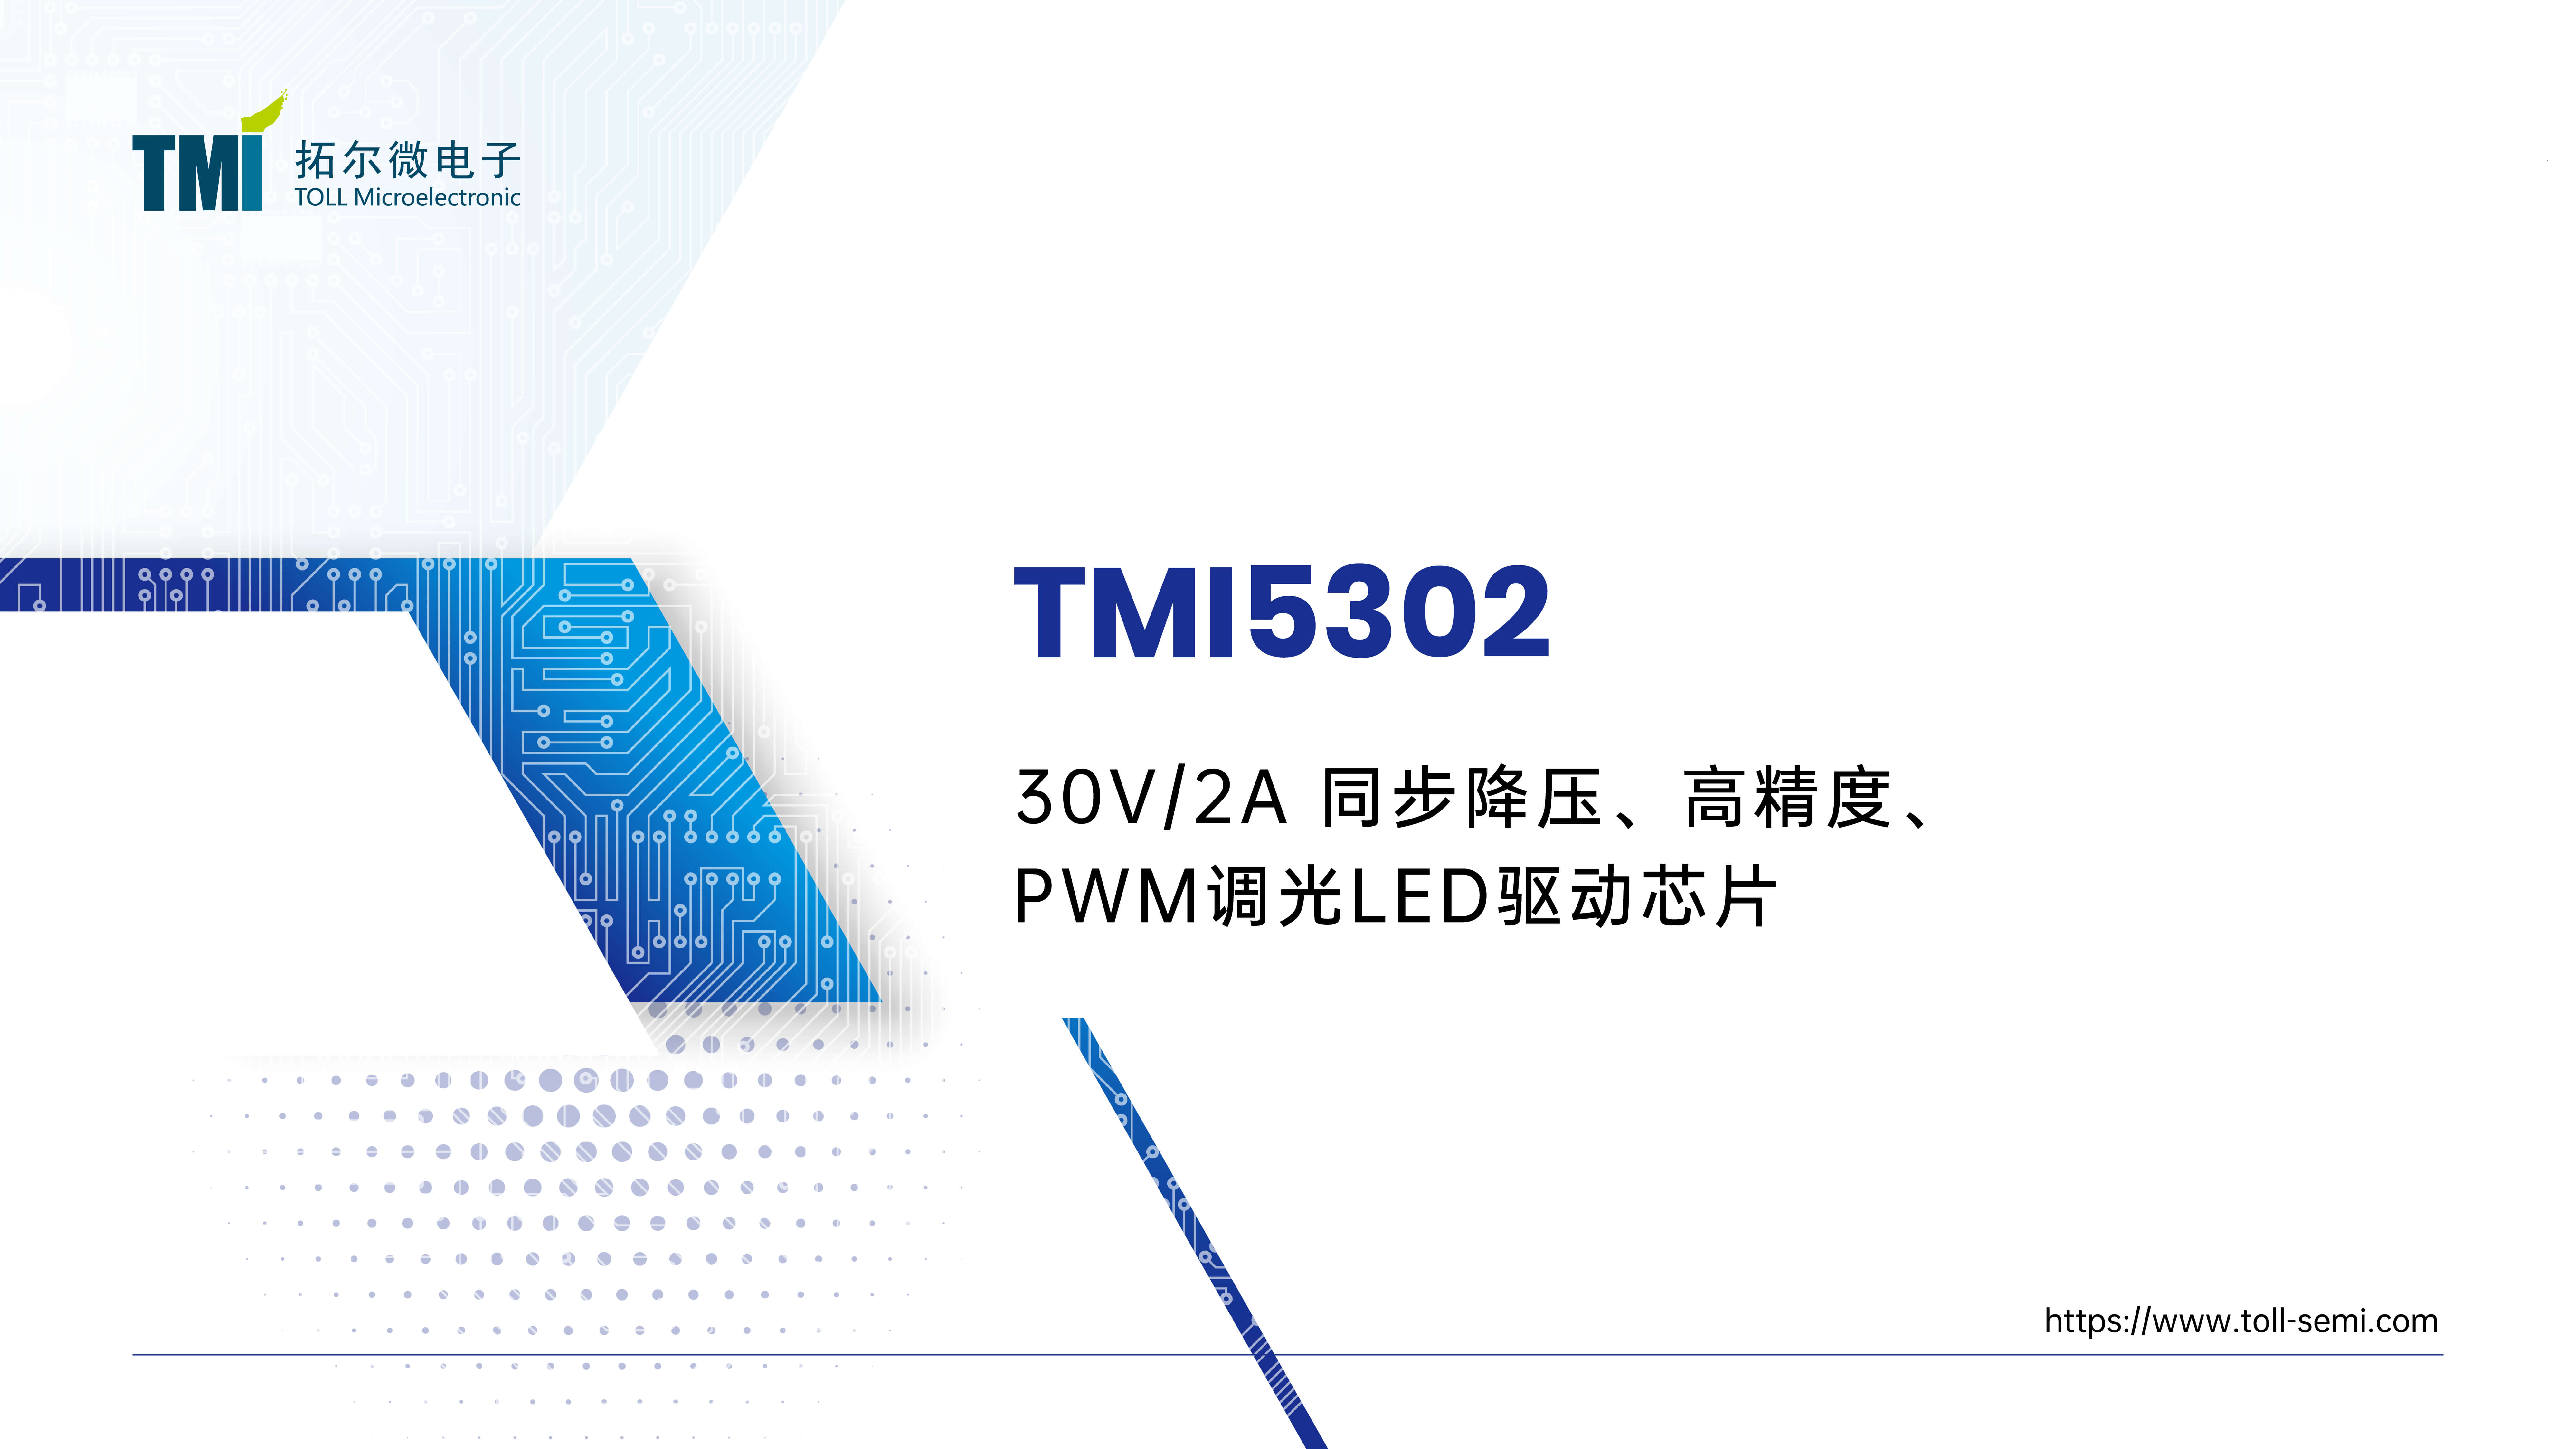 30V/2A 同步降压、高精度、PWM调光LED驱动芯片--TMI5302